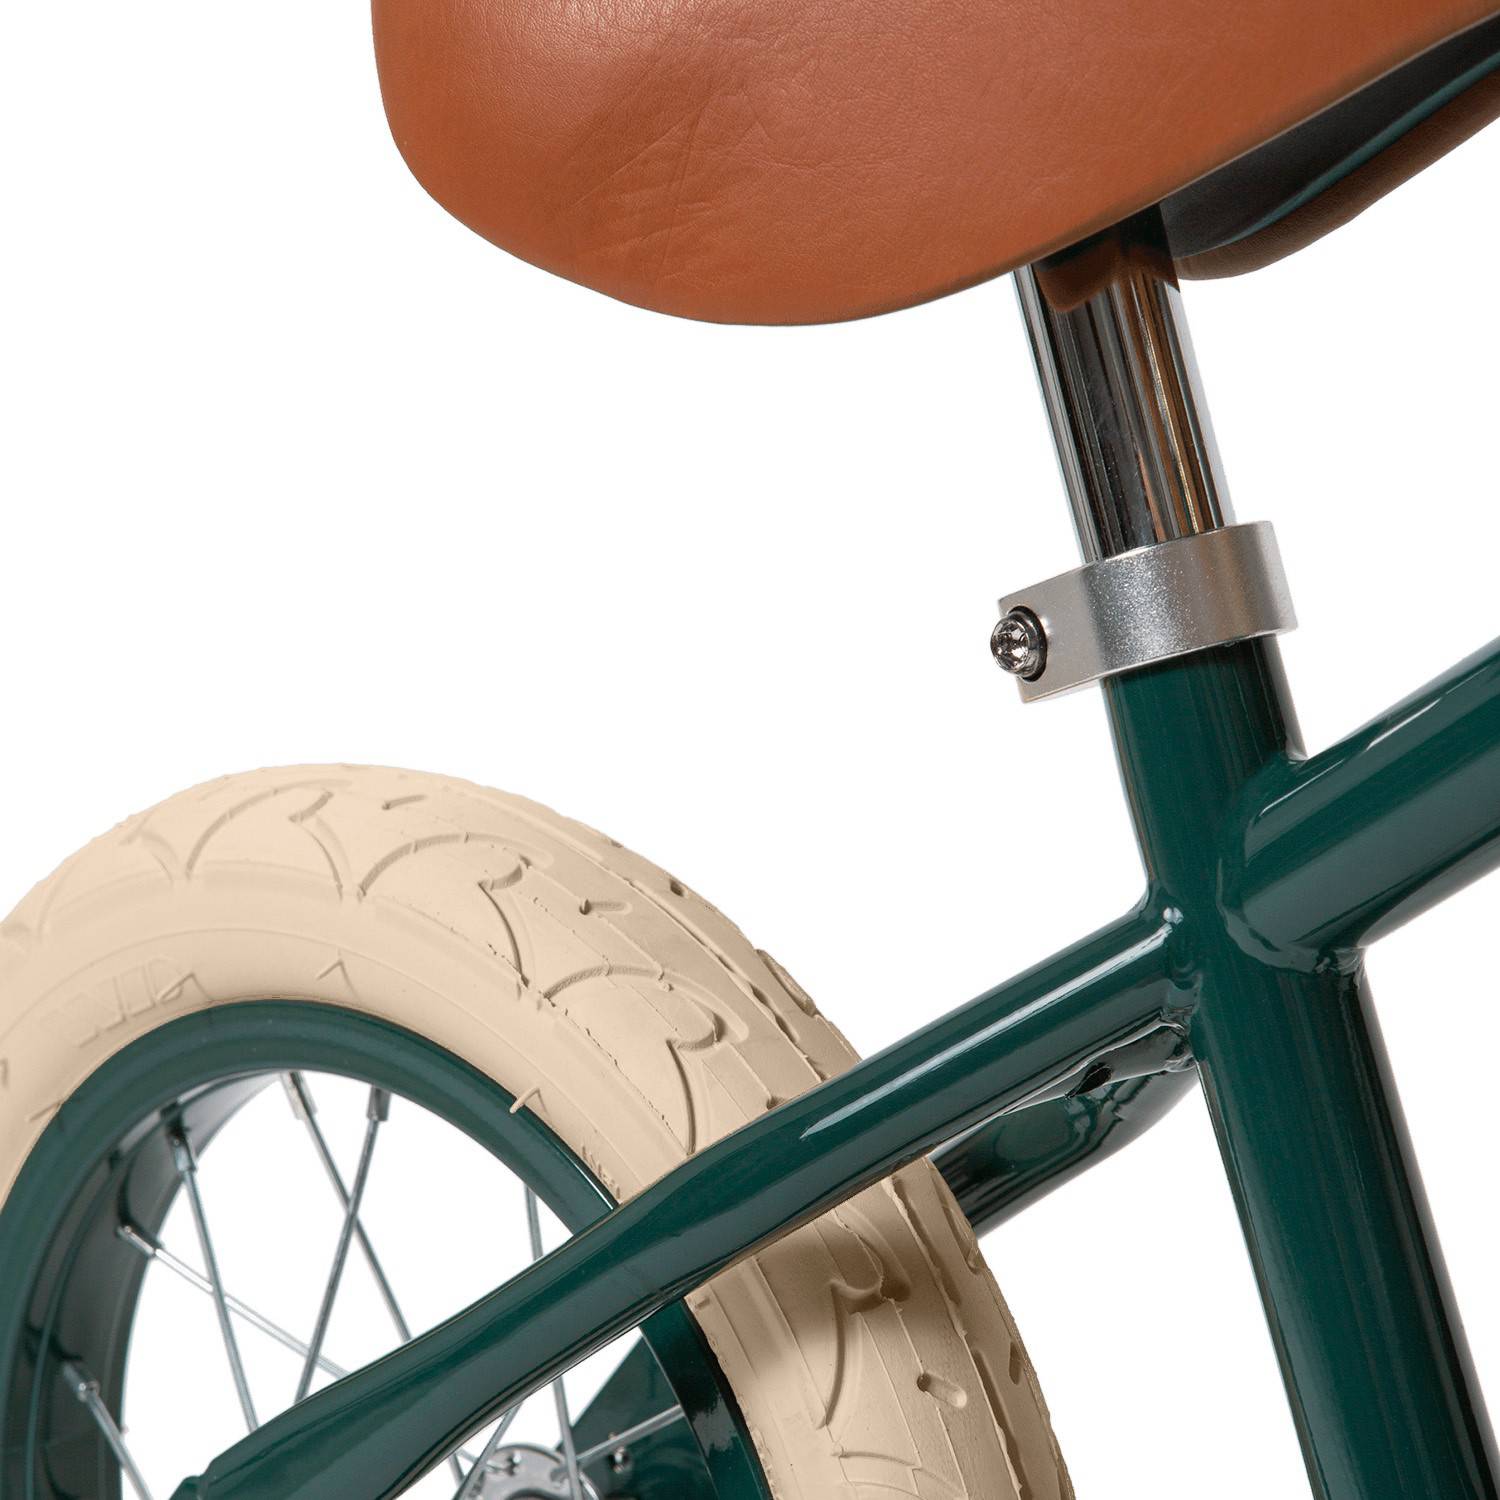 Banwood balance bicikl vintage, Green 